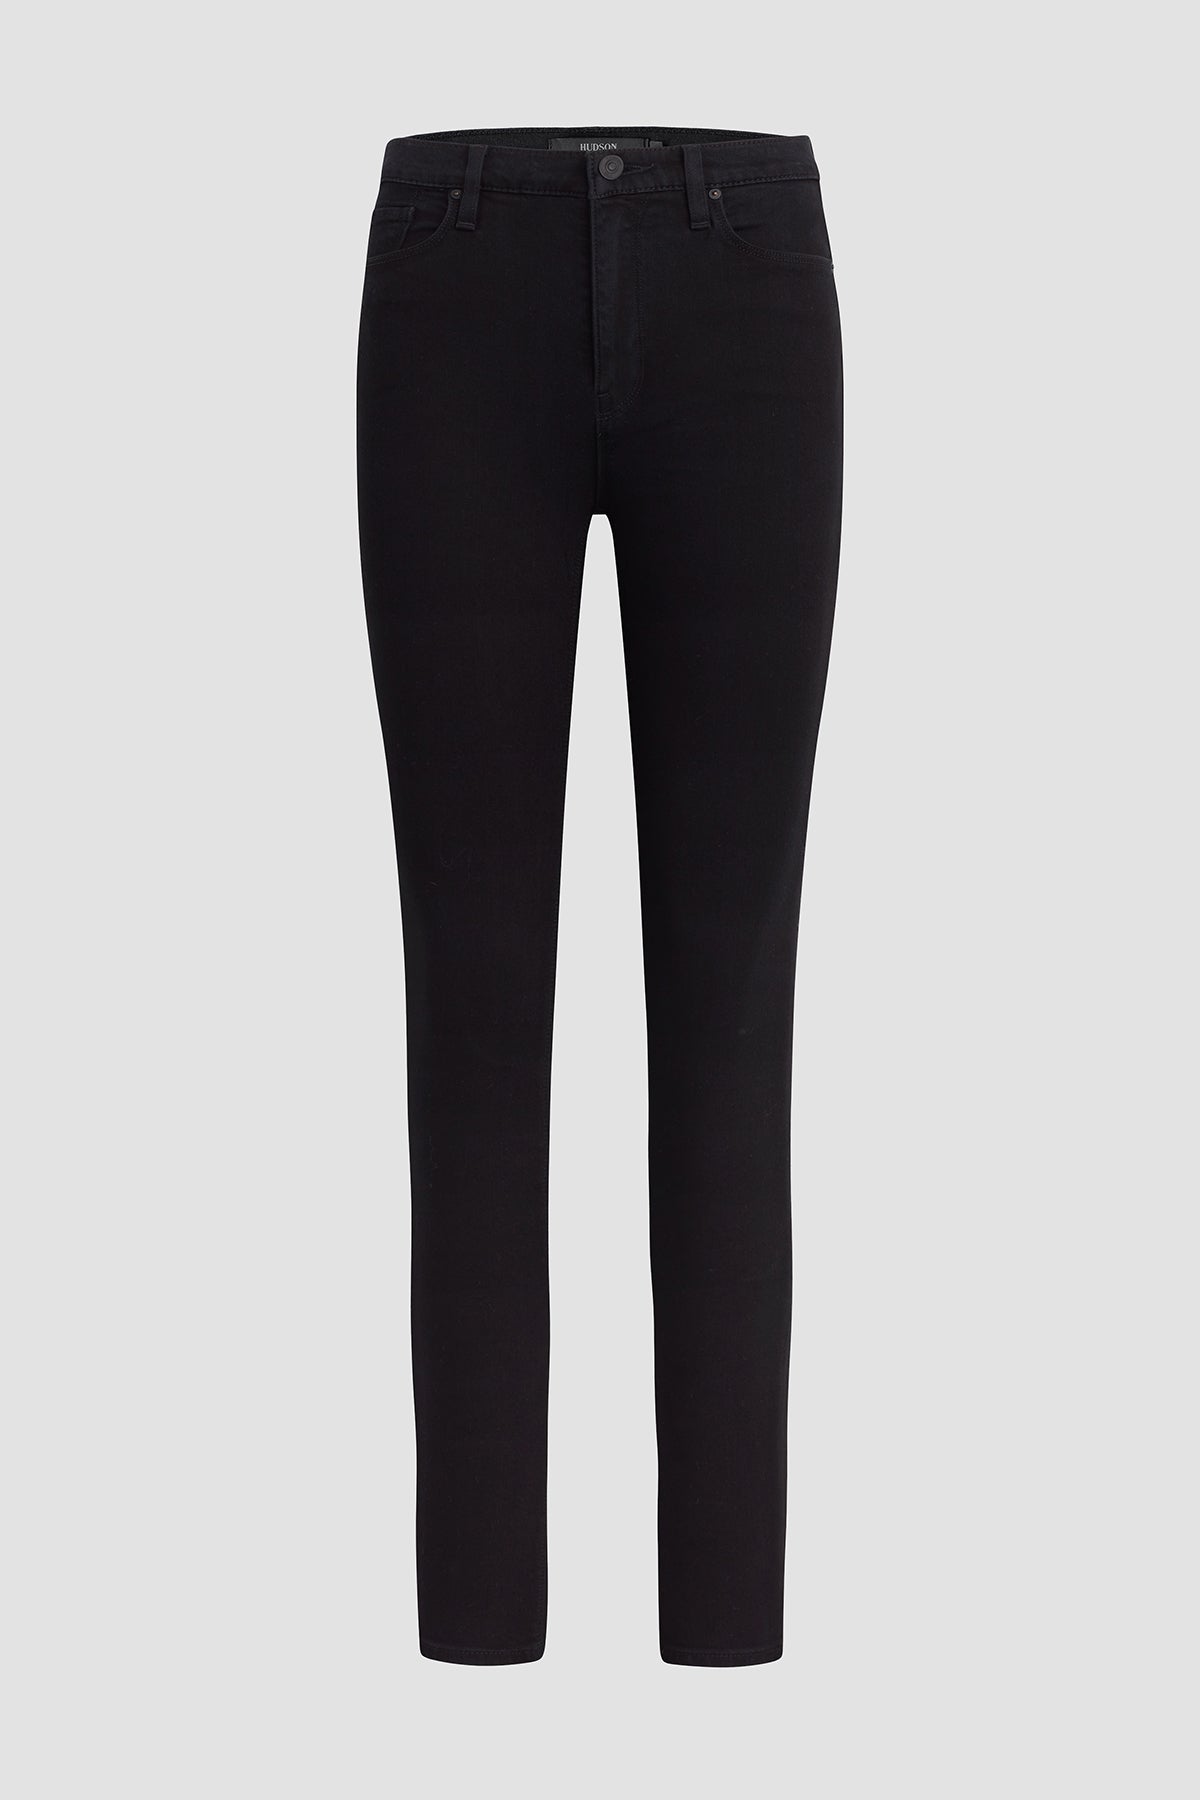 Women's Plus Size Skinny Jeans - Universal Thread Black 20W - D3 Surplus  Outlet